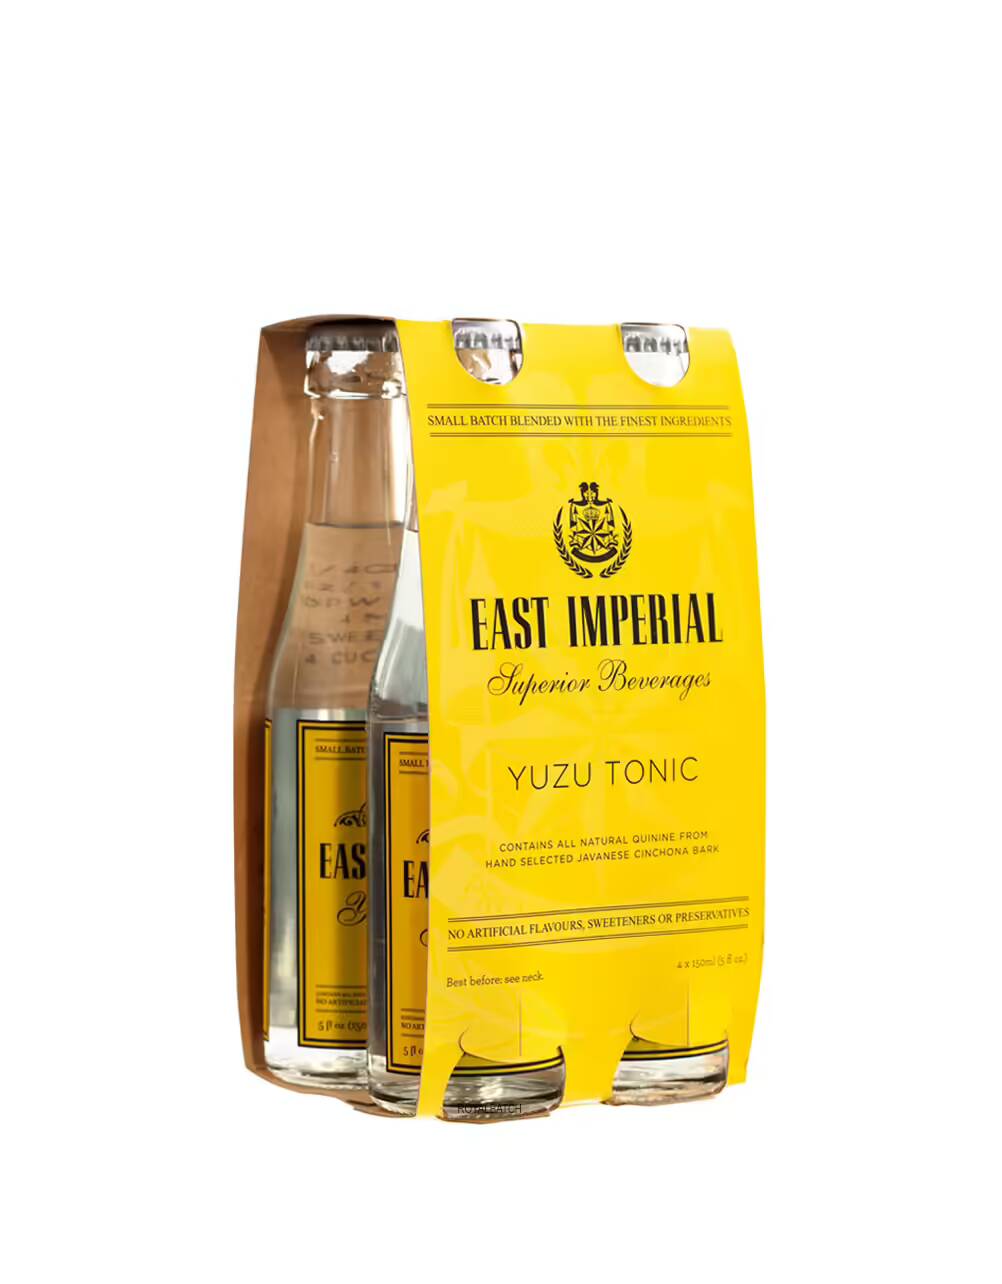 East Imperial Superior Beverages Yuzu Tonic (4 Pack) 150ml